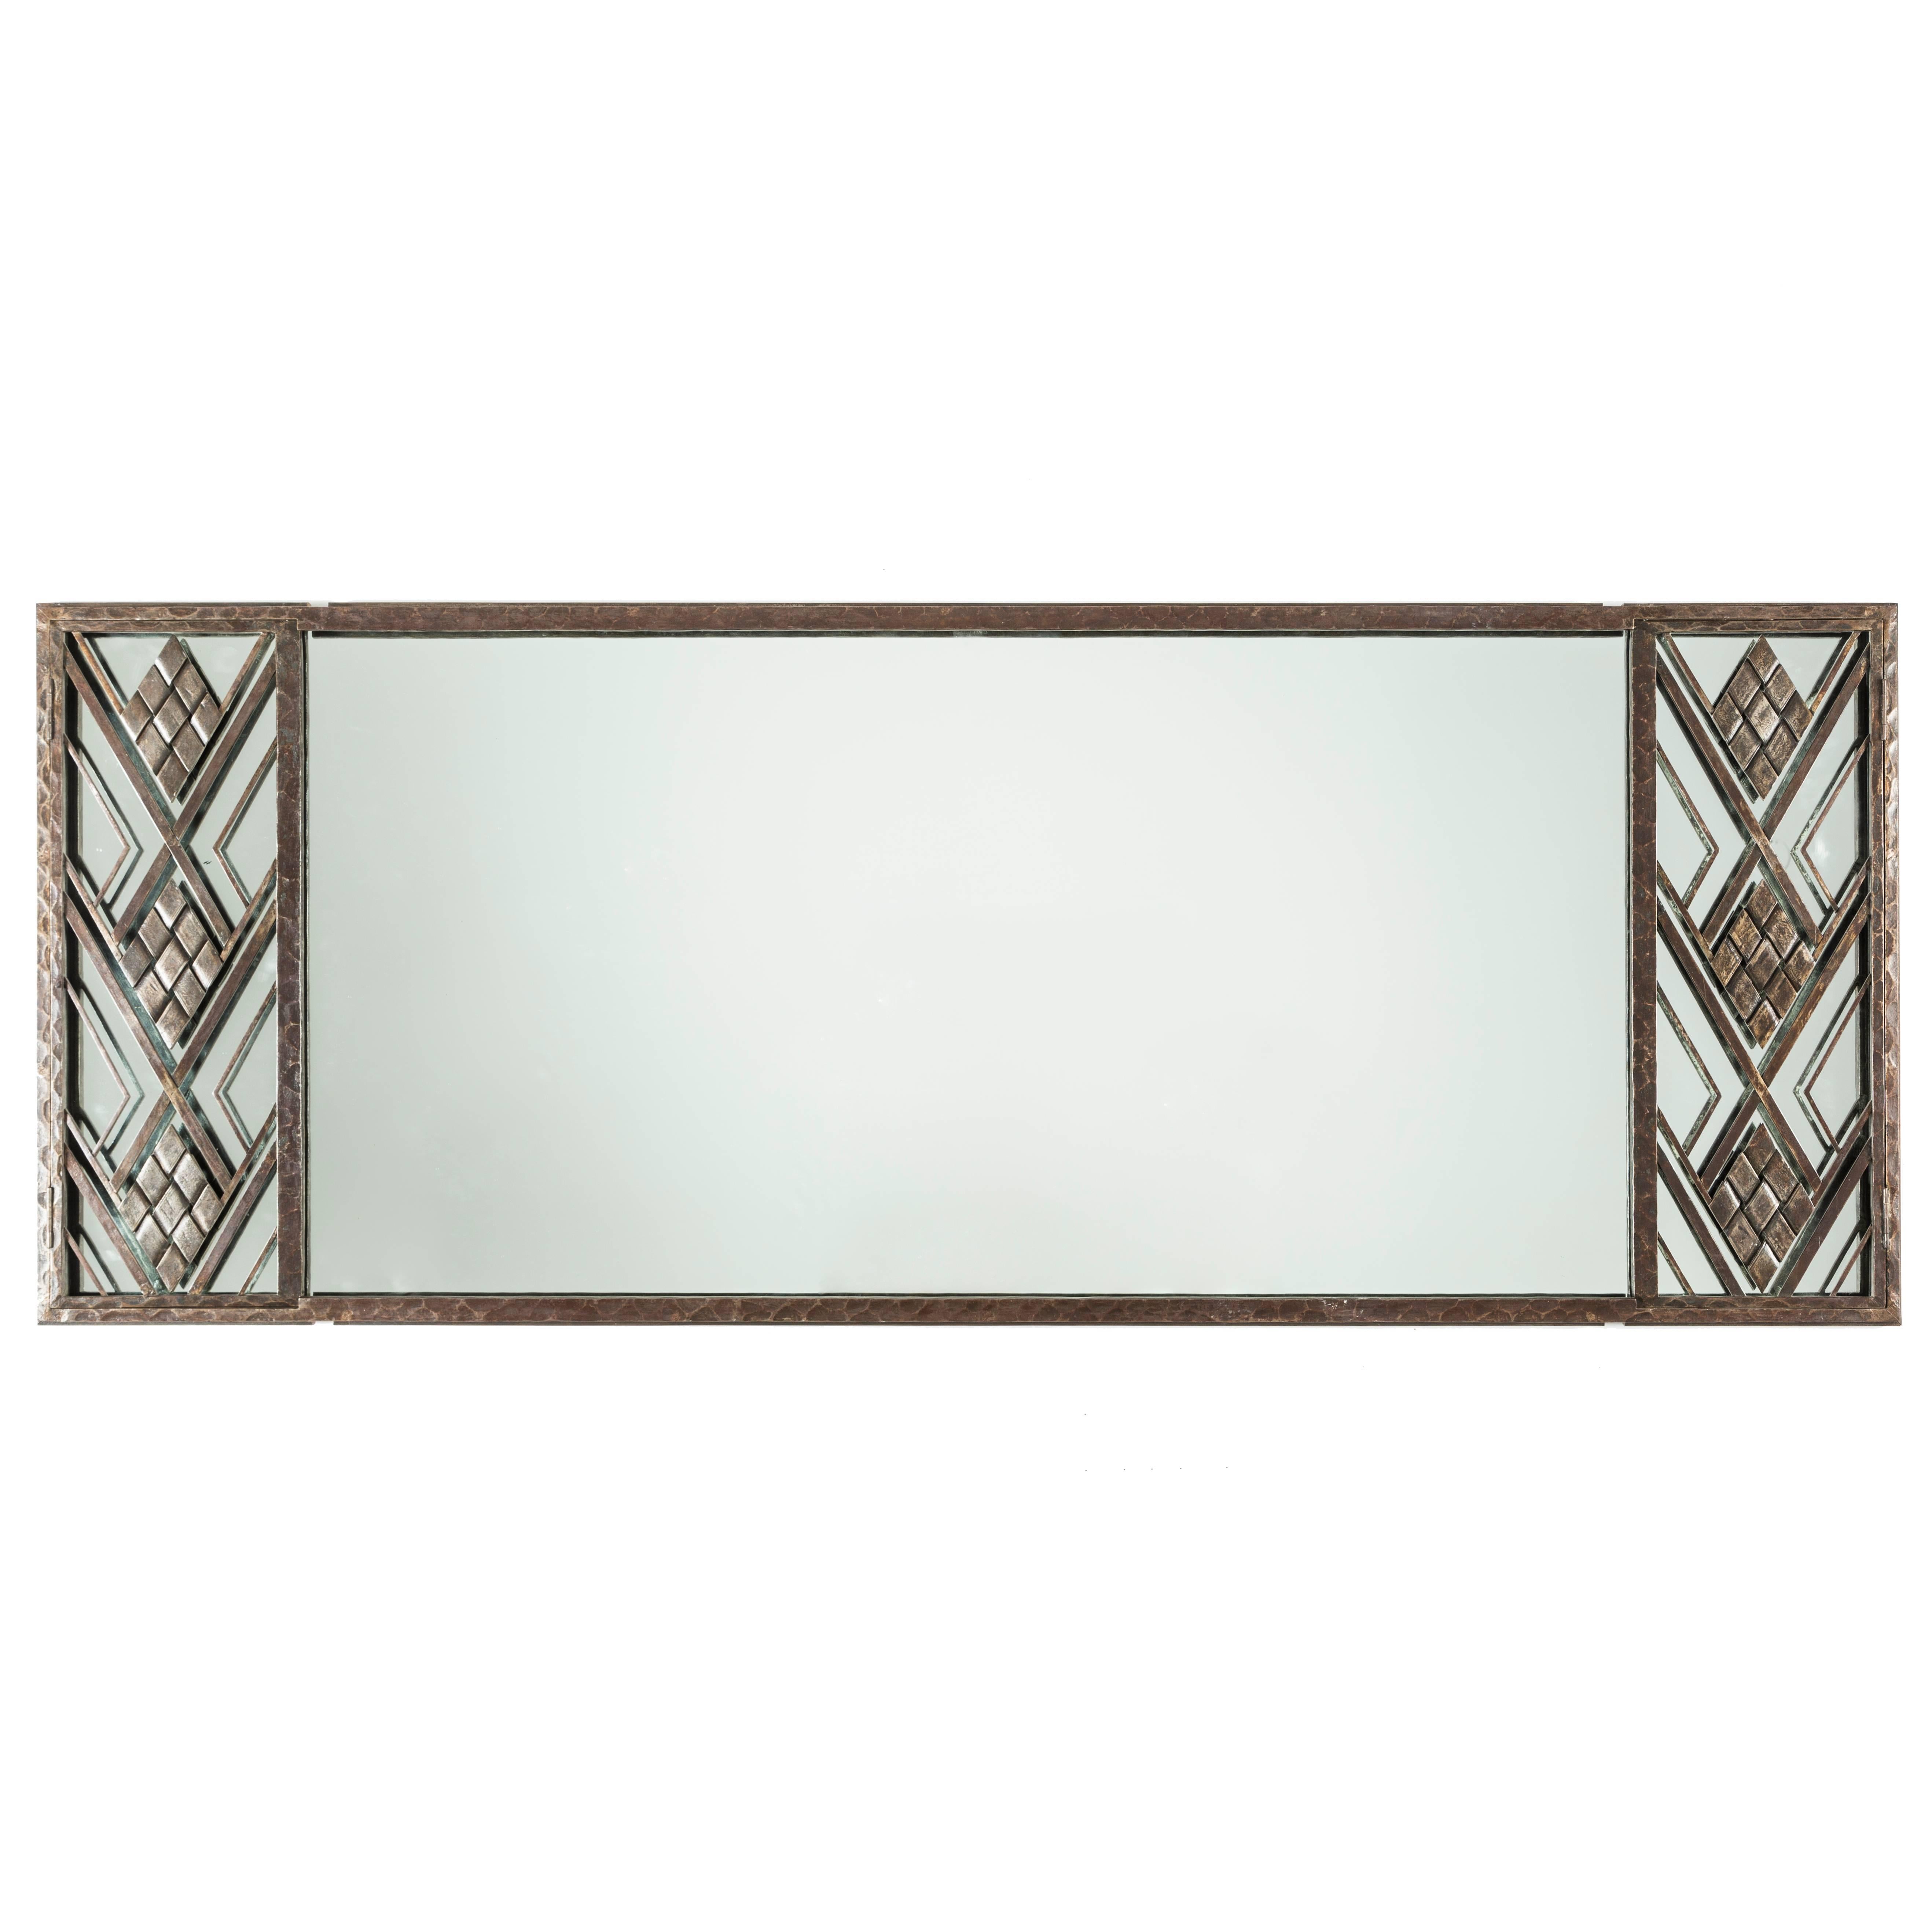 Welded Art Deco Period Mirror